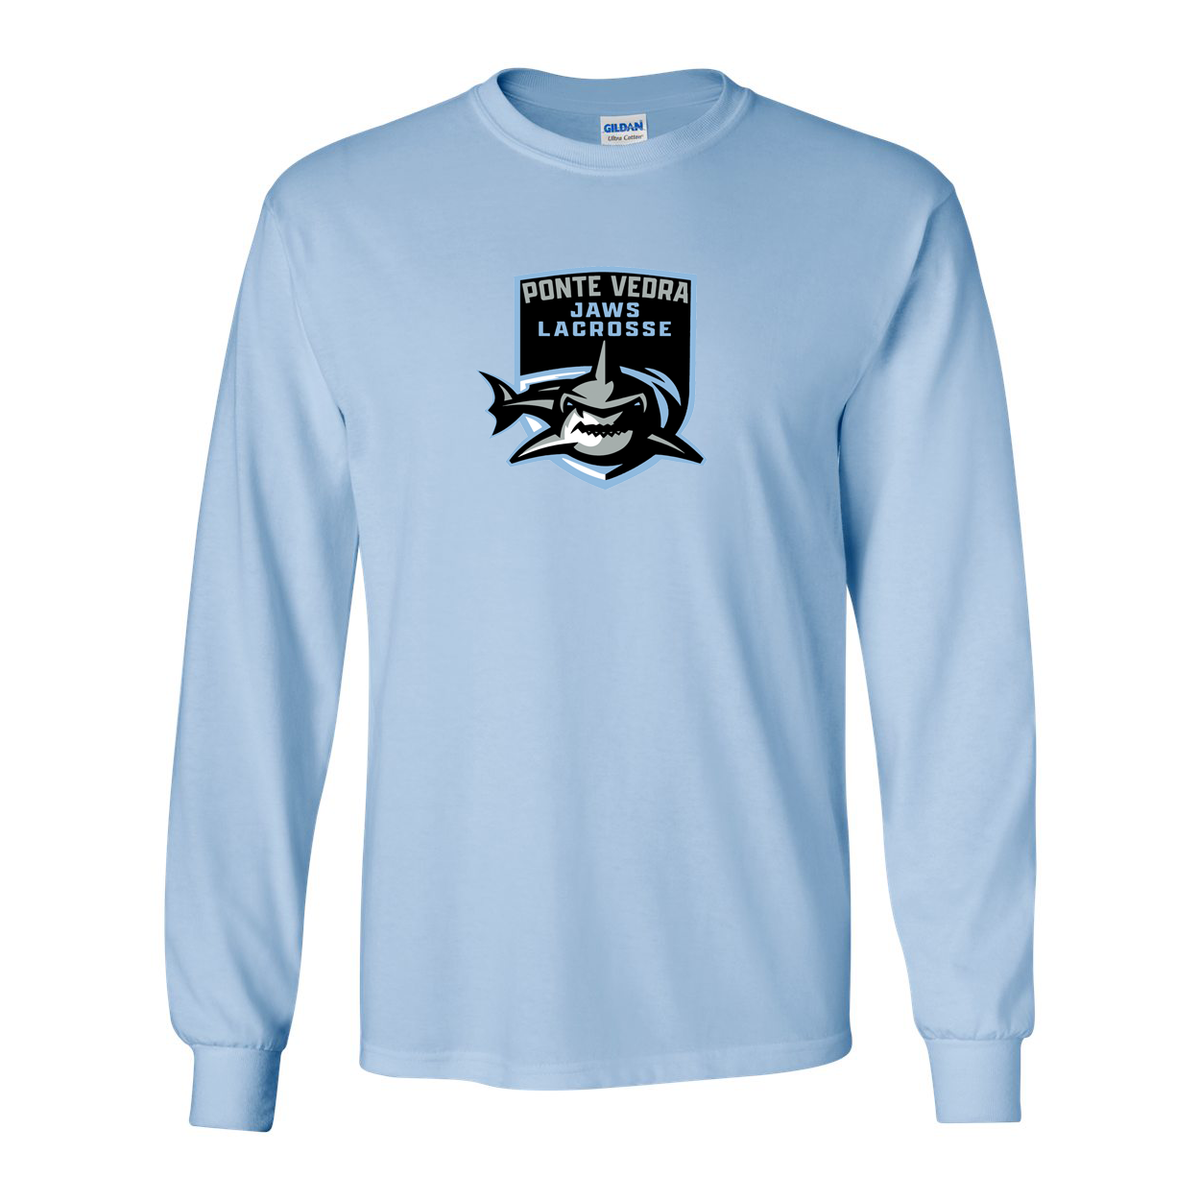 Ponte Vedra JAWS Lacrosse Ultra Cotton Long Sleeve Shirt